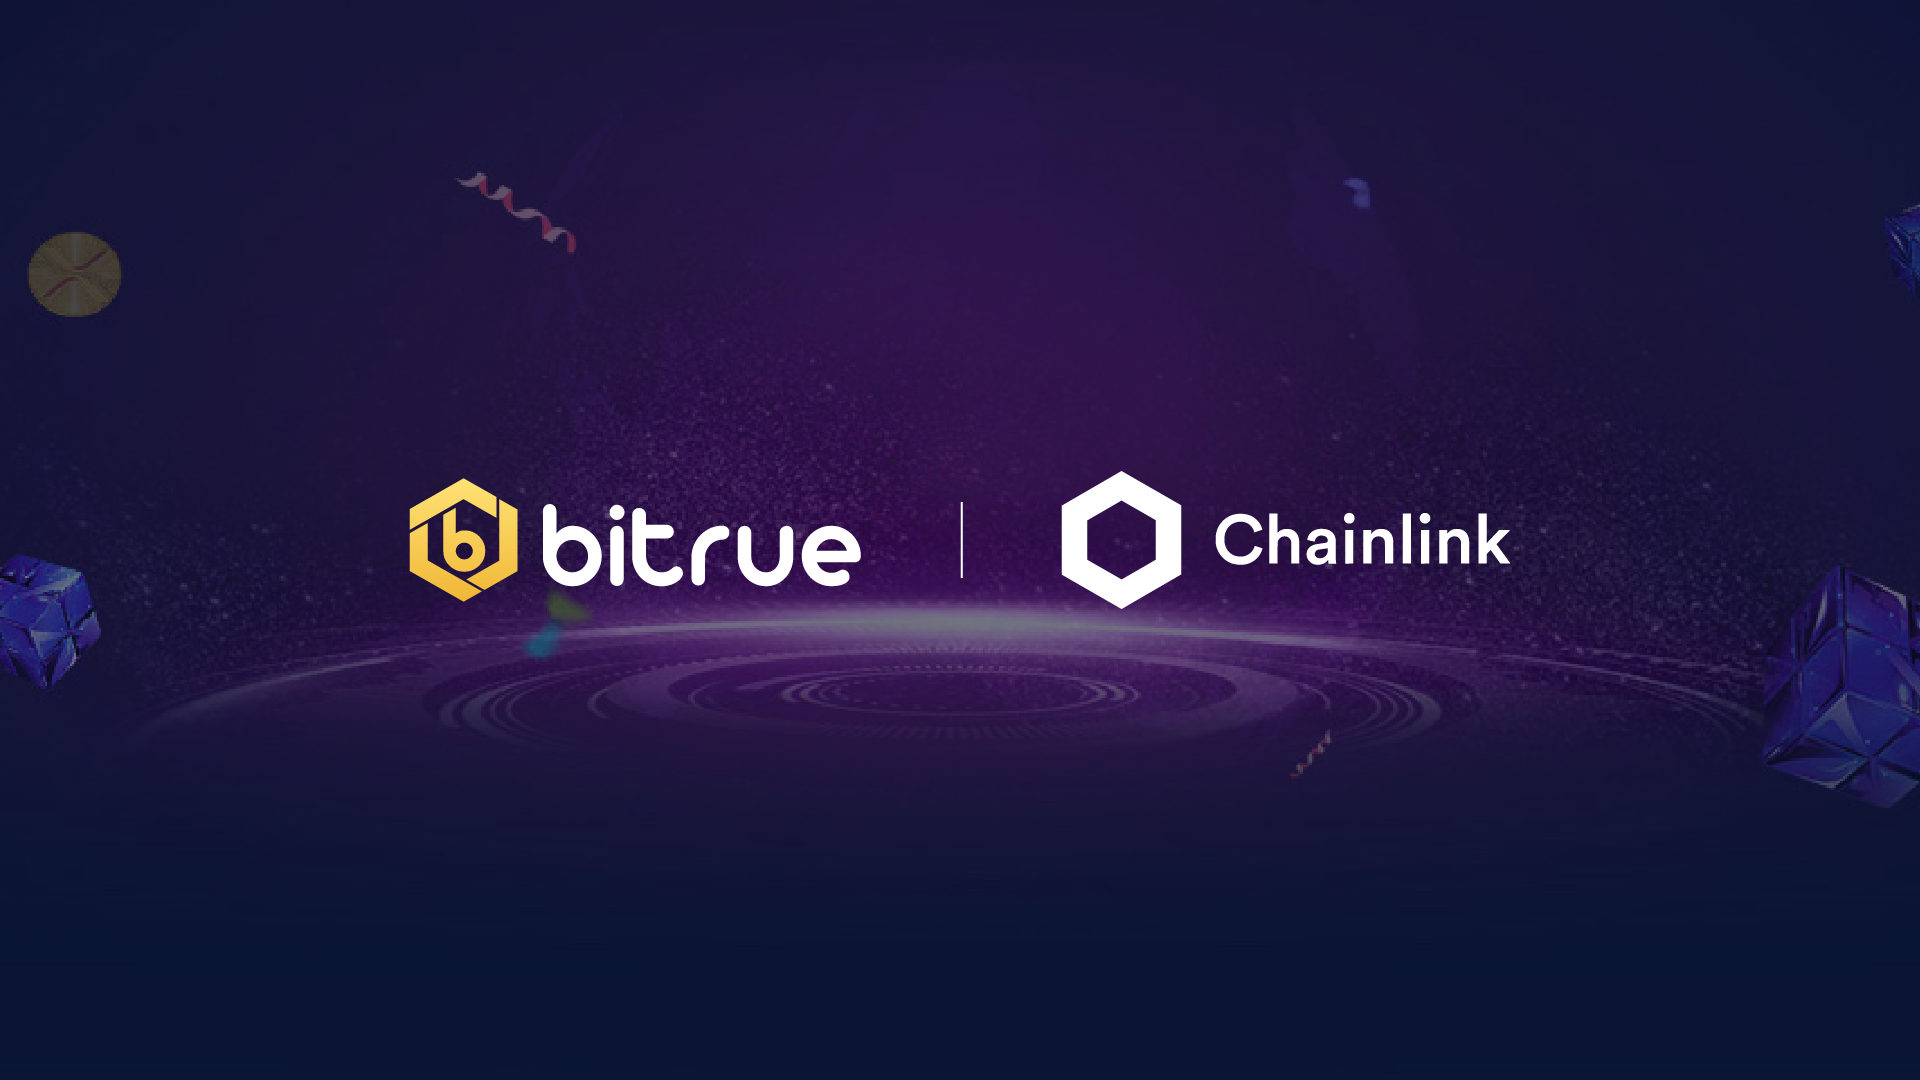 Bitrue已在每日有奖竞猜产品中应用Chasdfsinlink VR